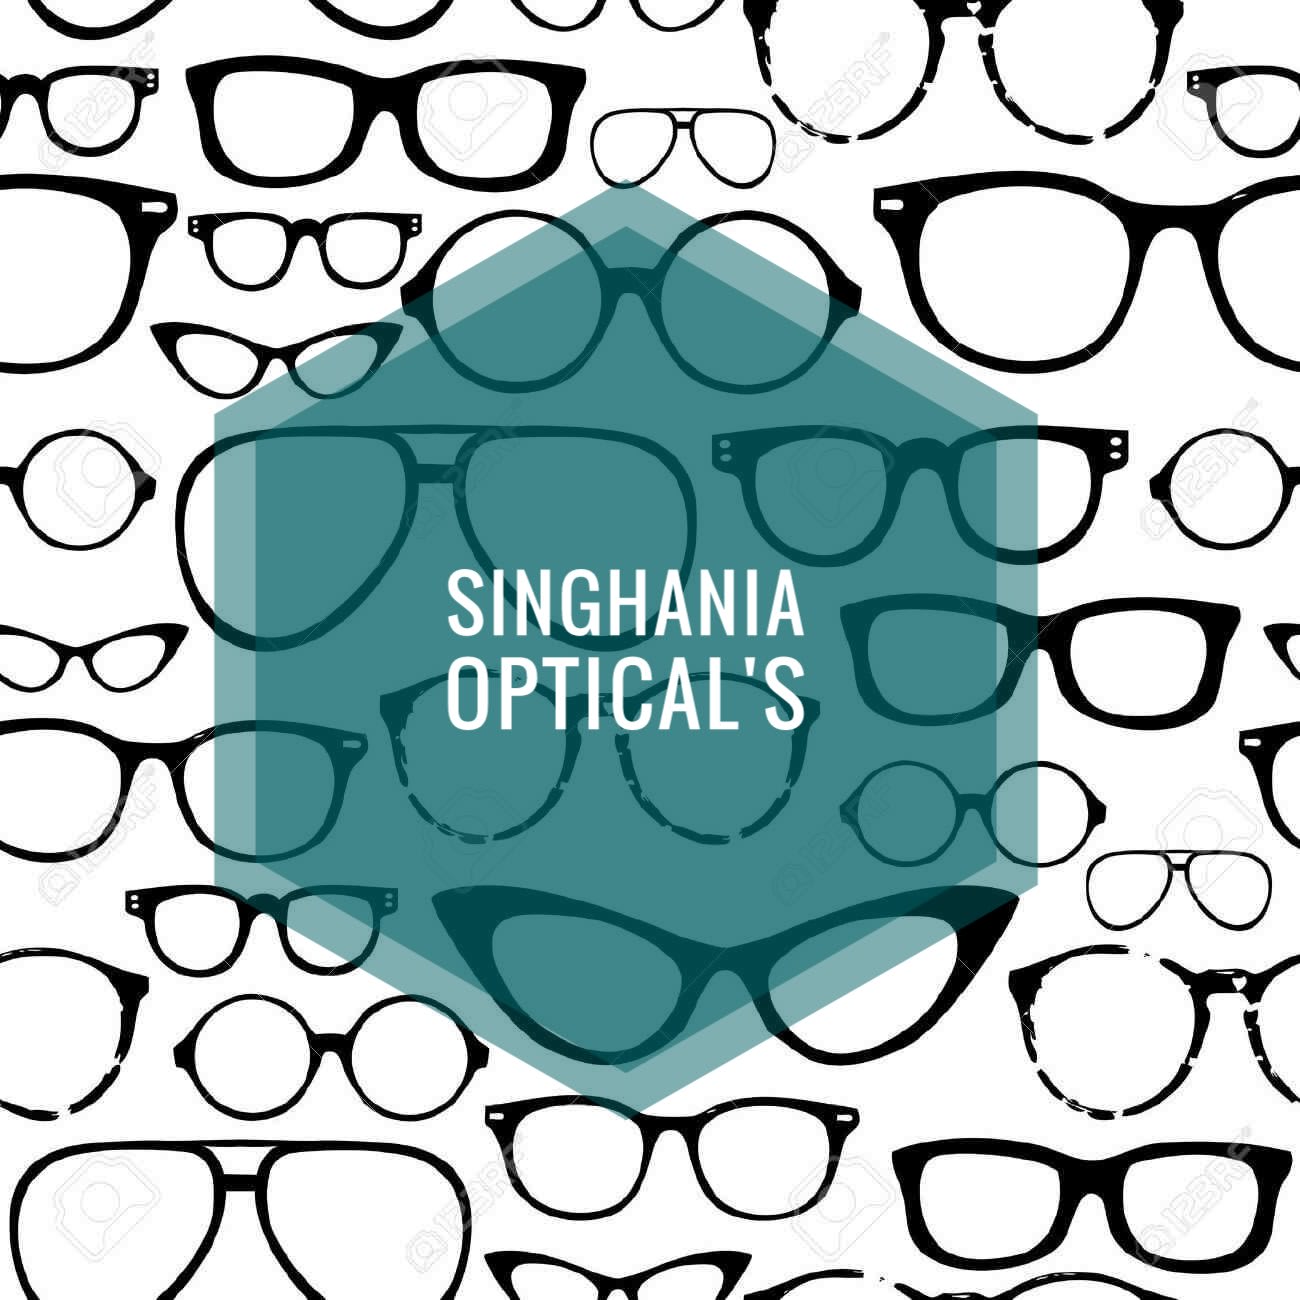 Singhania opticals